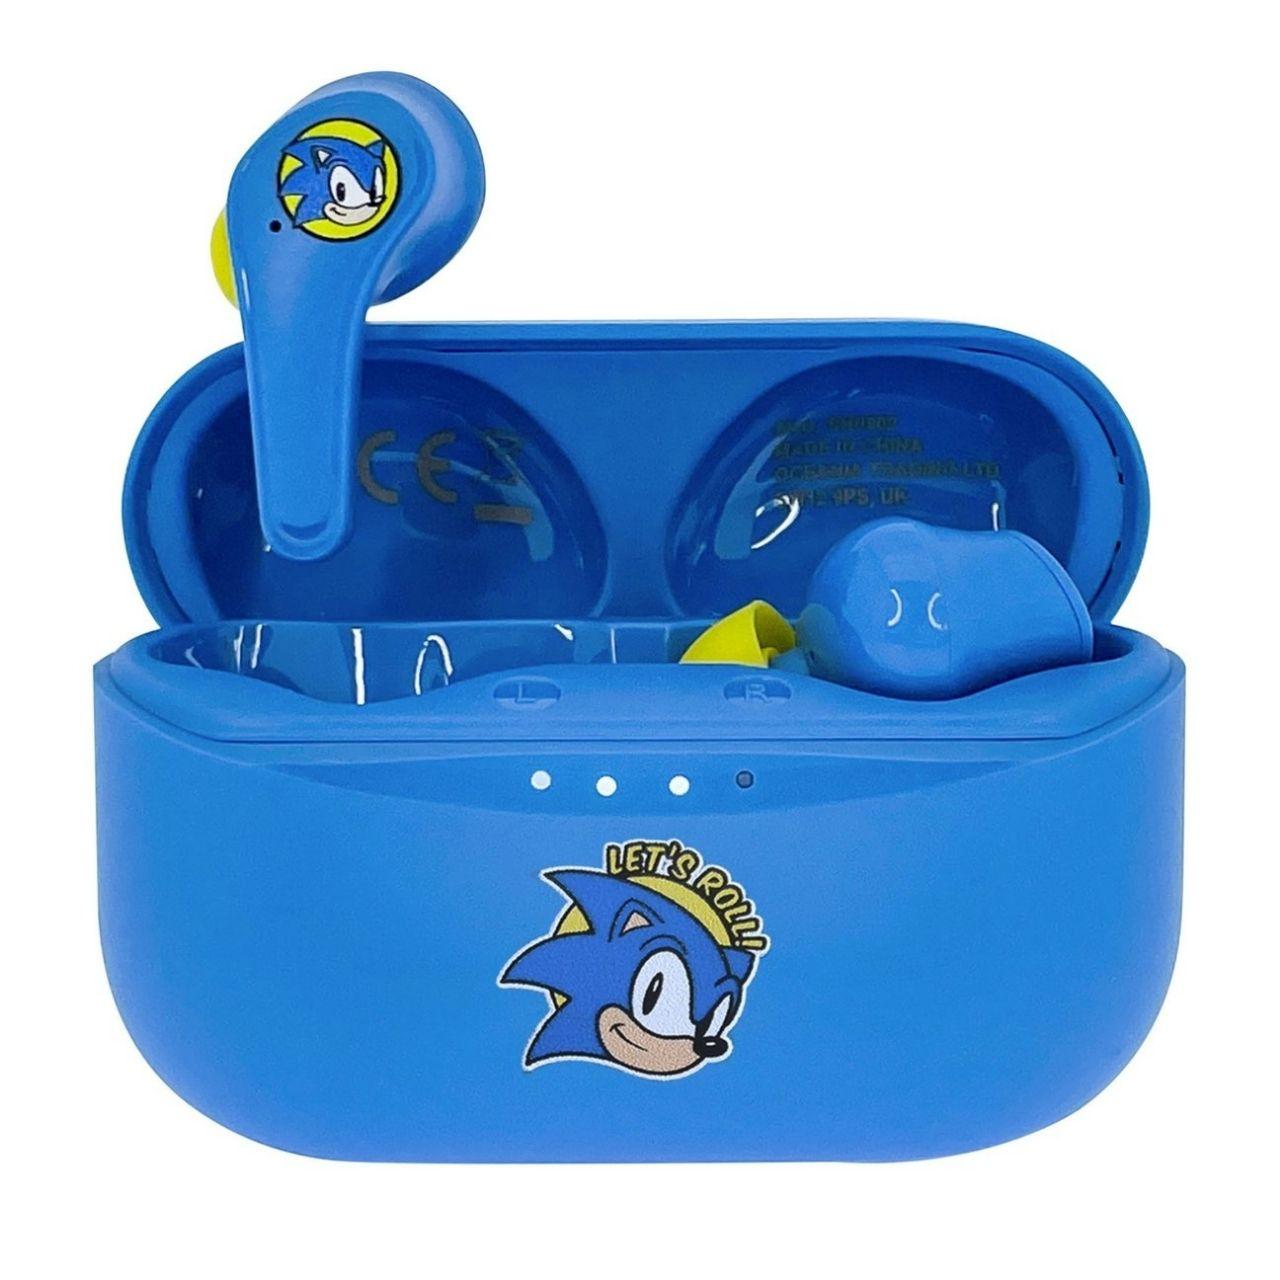 SEGA Sonic The Hedgehog TWS Earphones Blue - childrensheadphones.co.uk